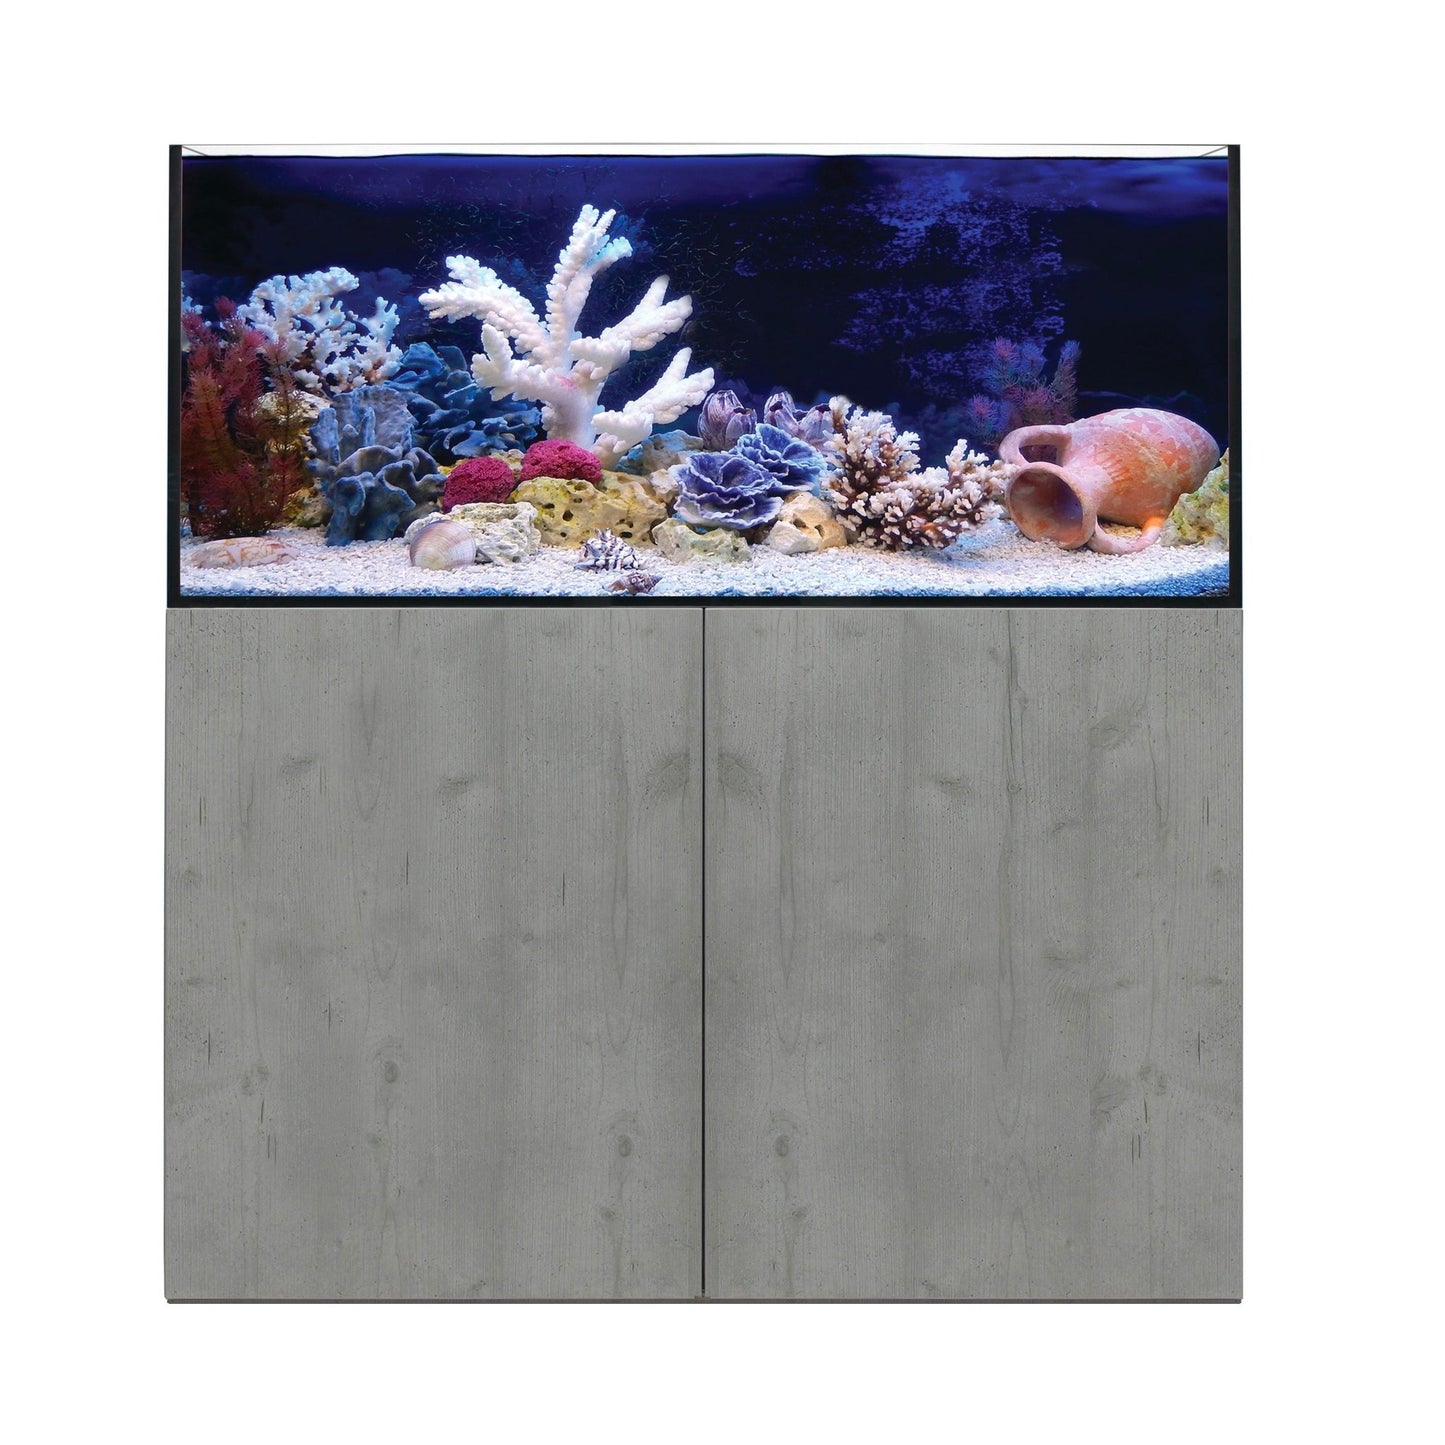 Aqua One ReefSys 326 Aquarium and Cabinet - Boston Concrete - Charterhouse Aquatics